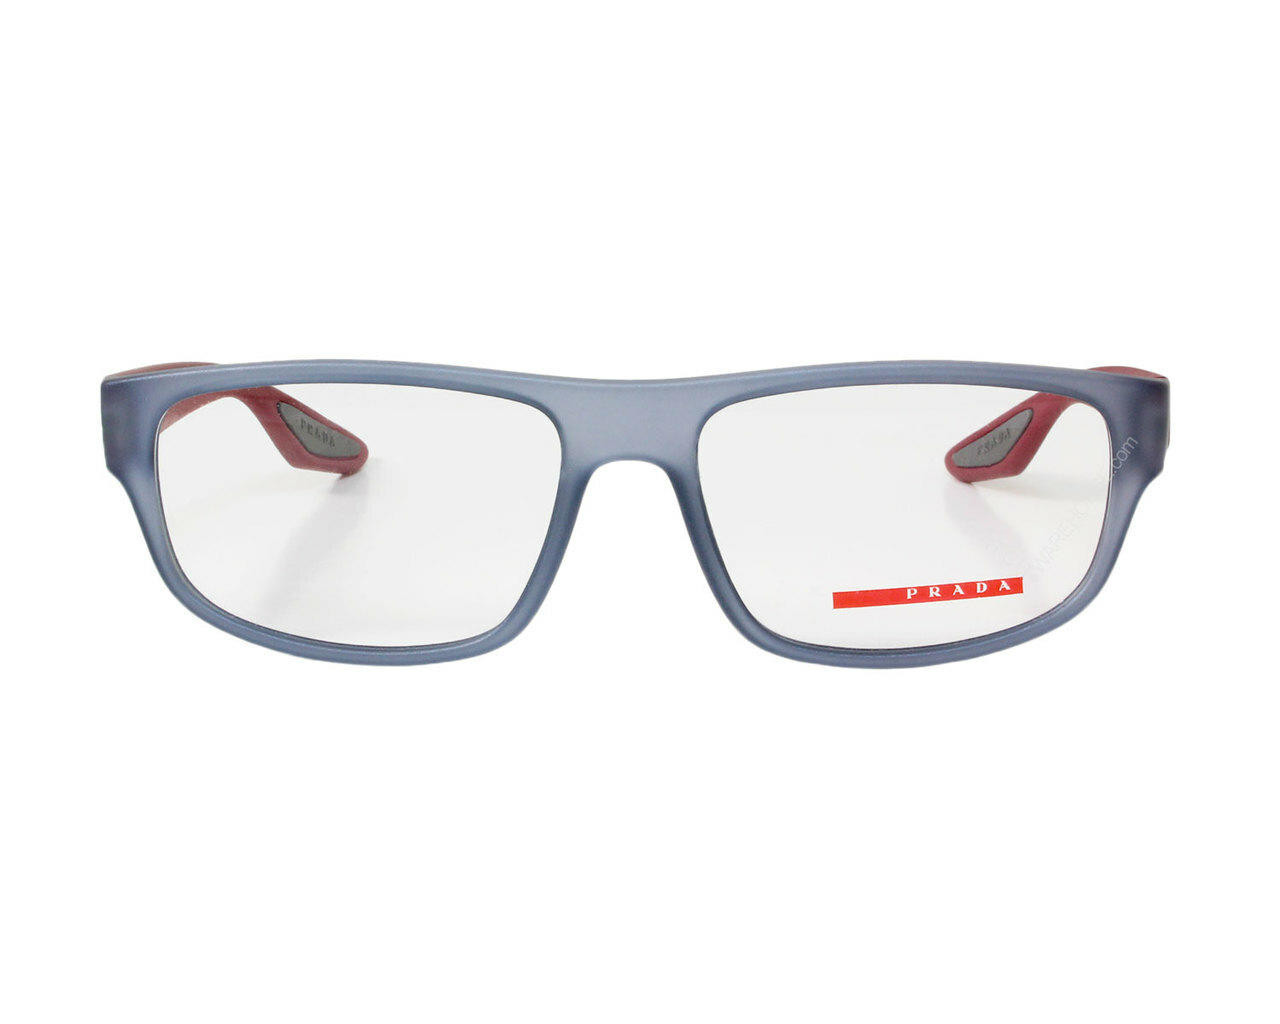 Prada Eyewear | Designer Brand Glasses | Watch Warehouse